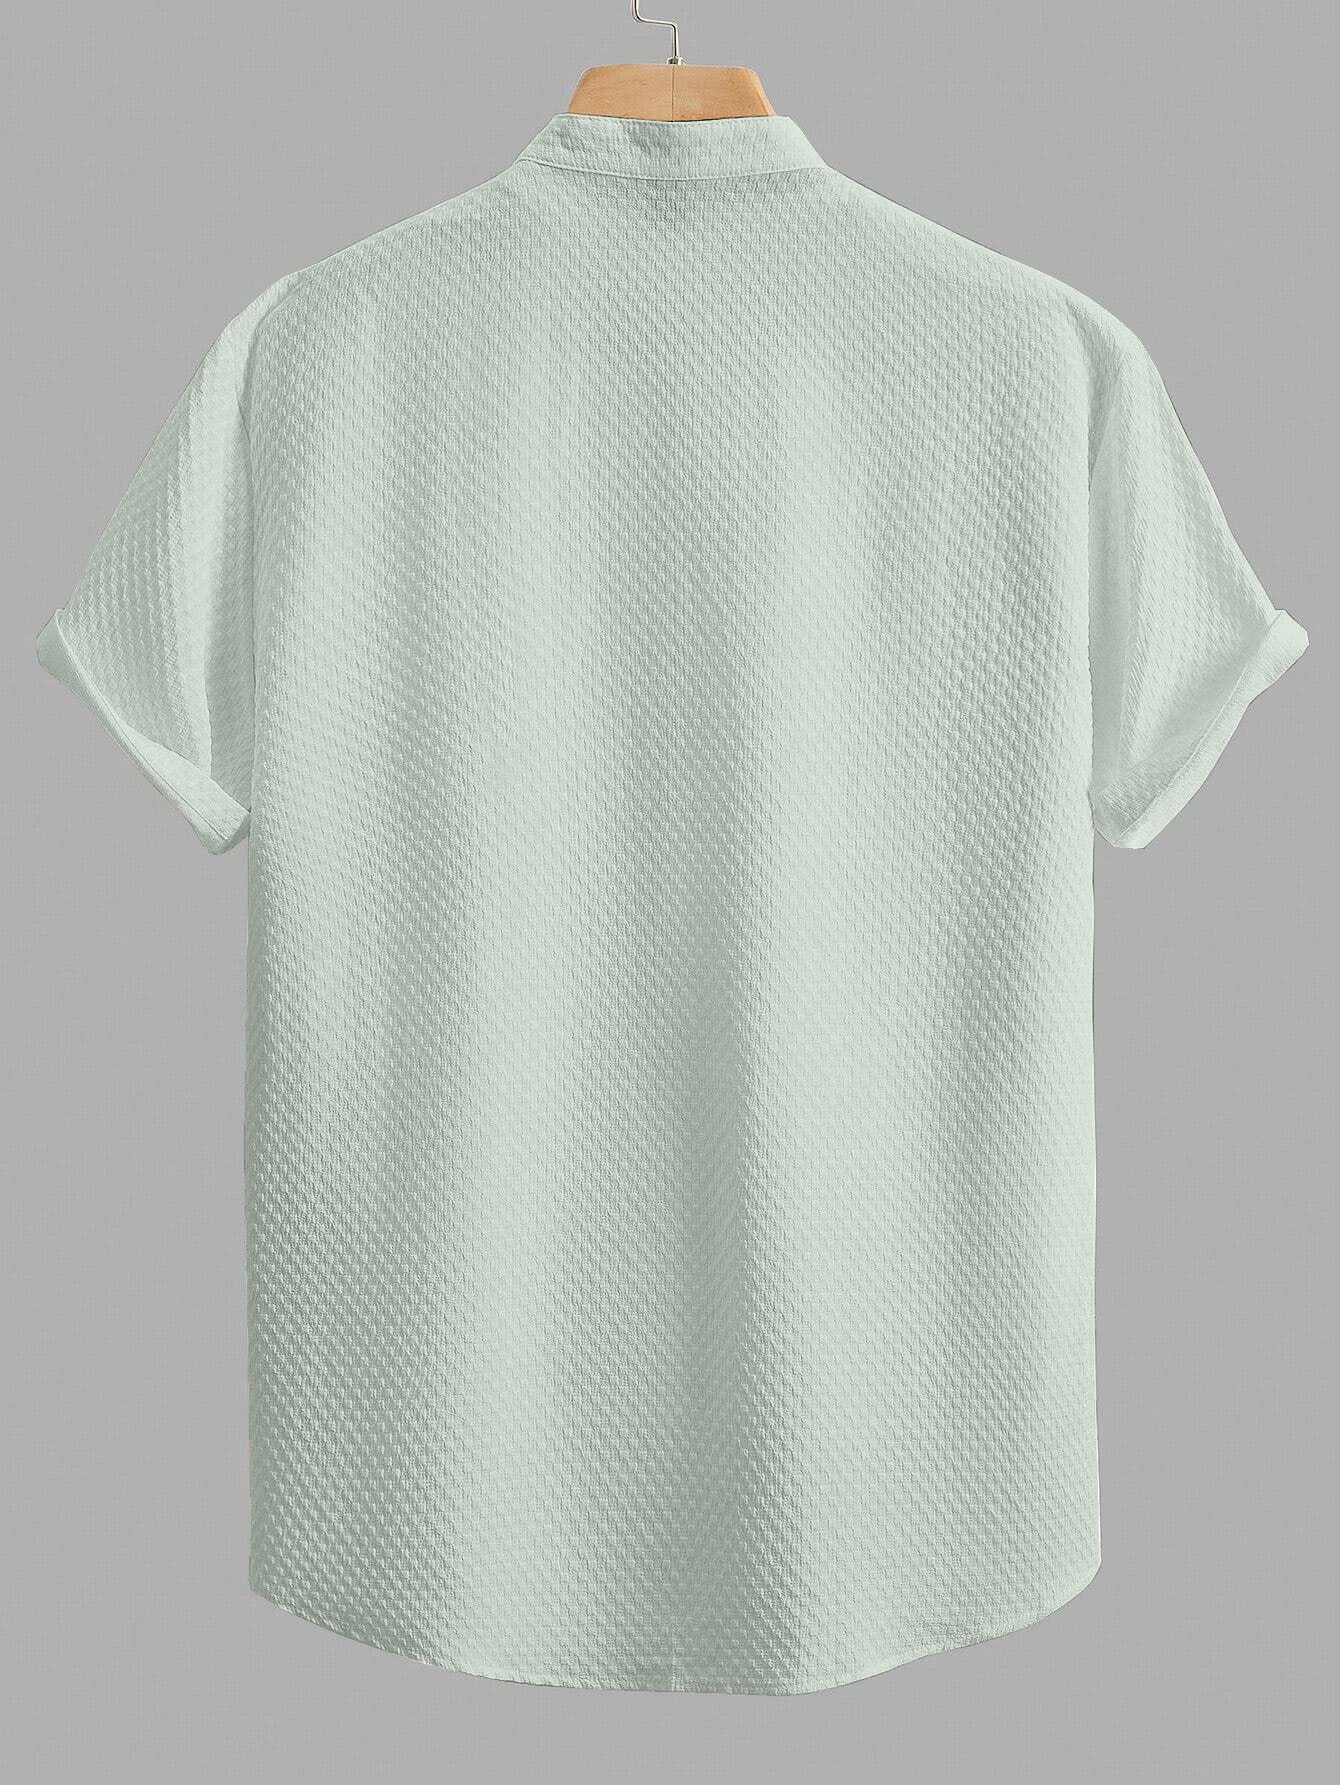 Pista Colour Men's Casual Wear Short Sleeve Shirt